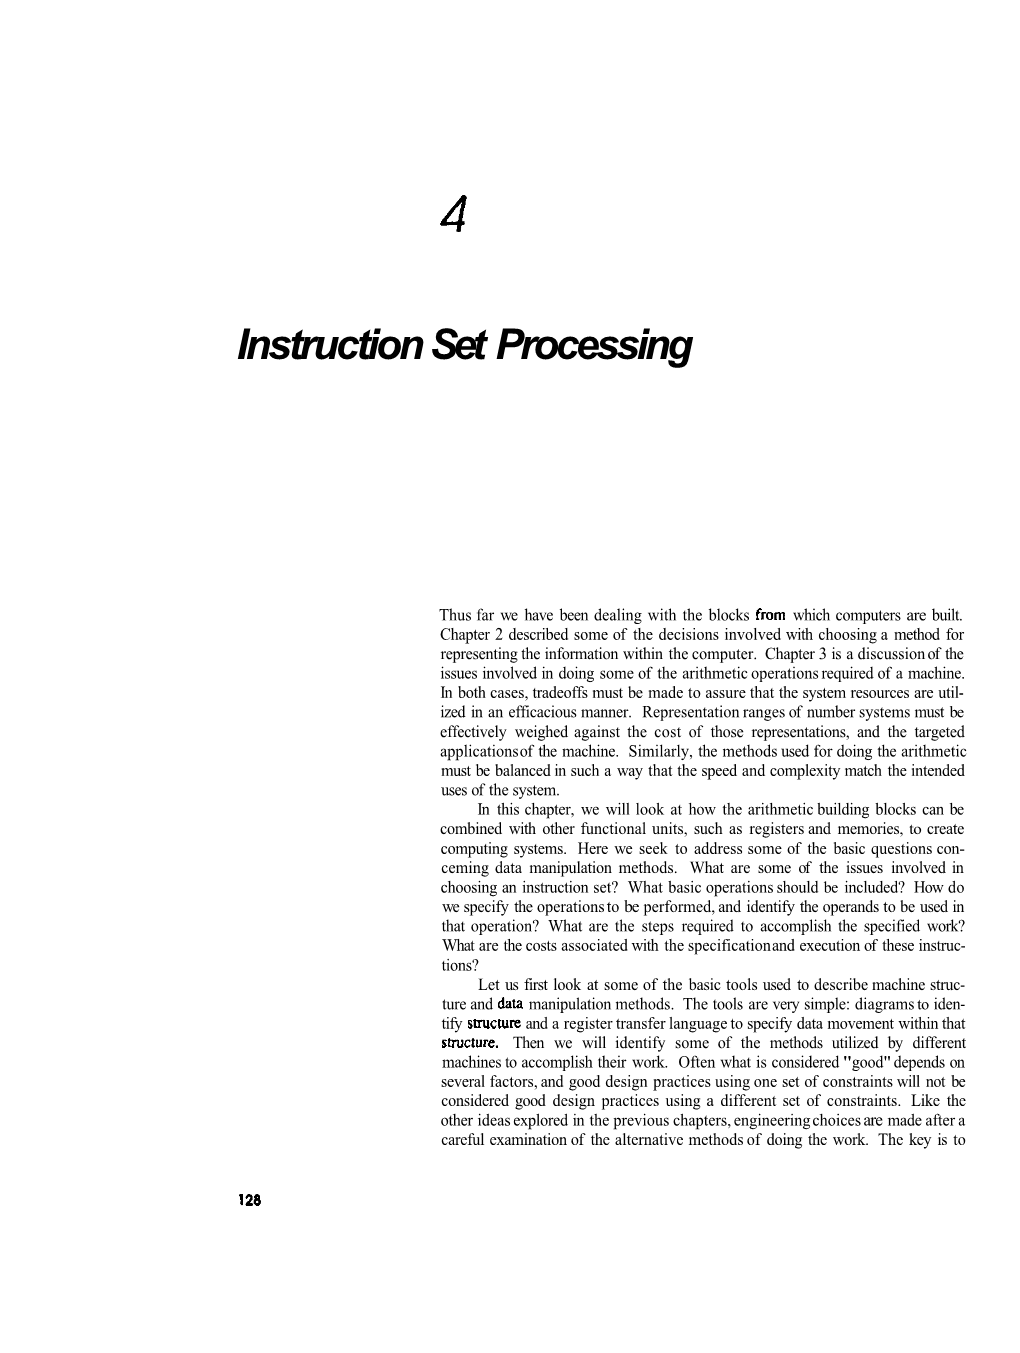 Instruction Set Processing